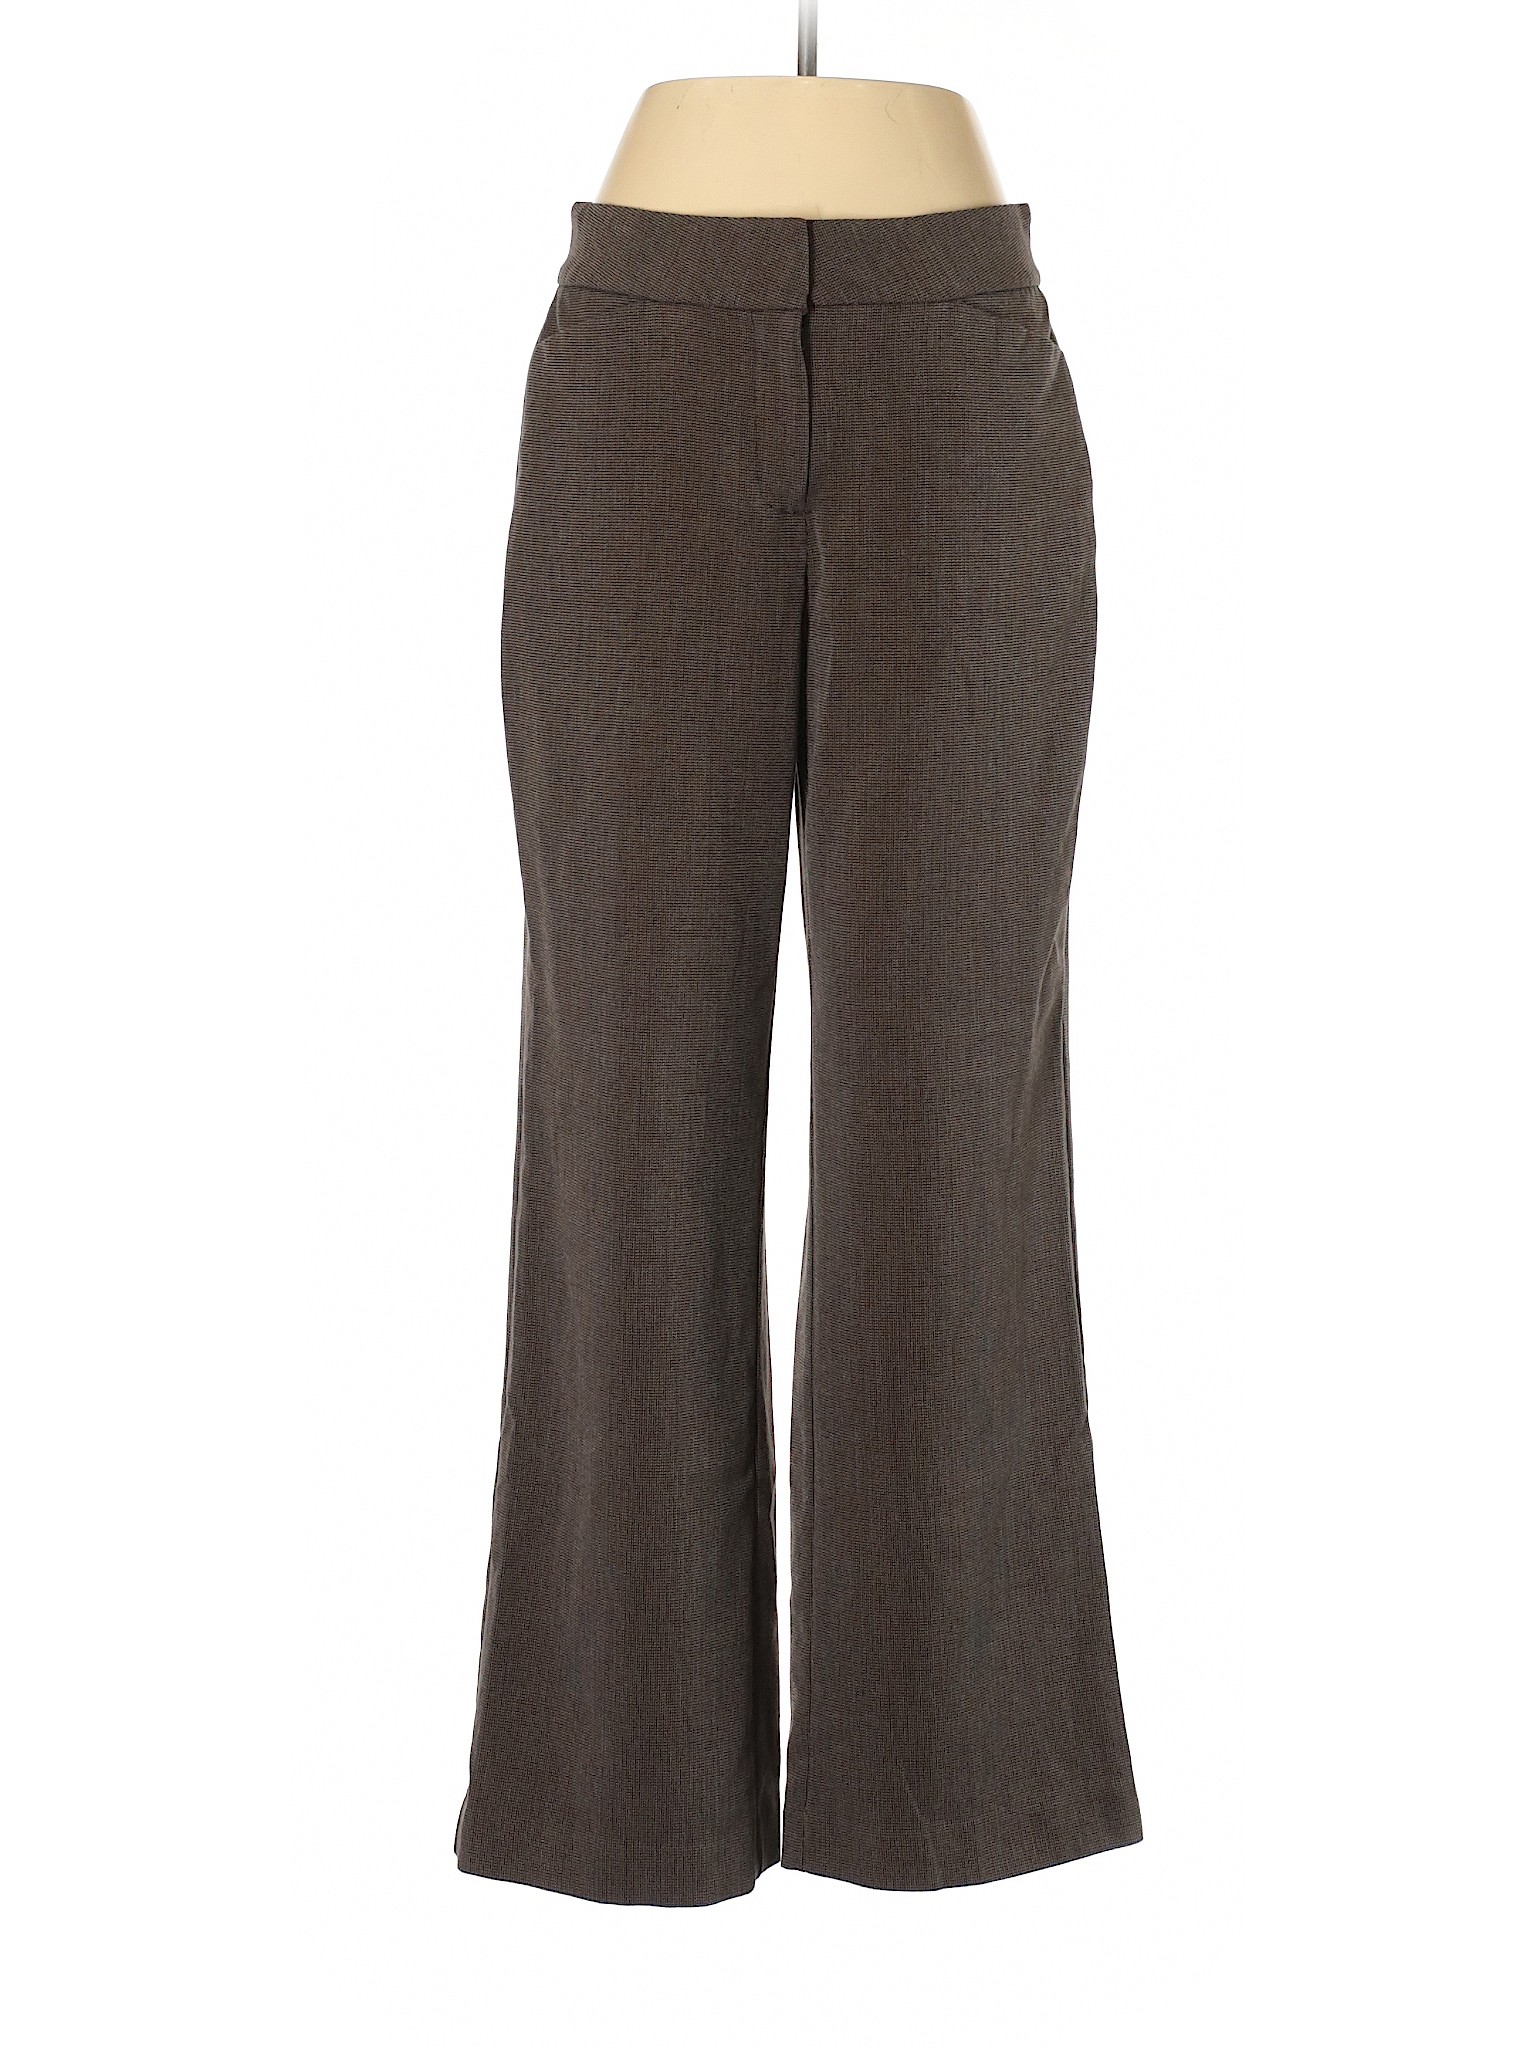 Dana Buchman Women Brown Dress Pants 8 | eBay